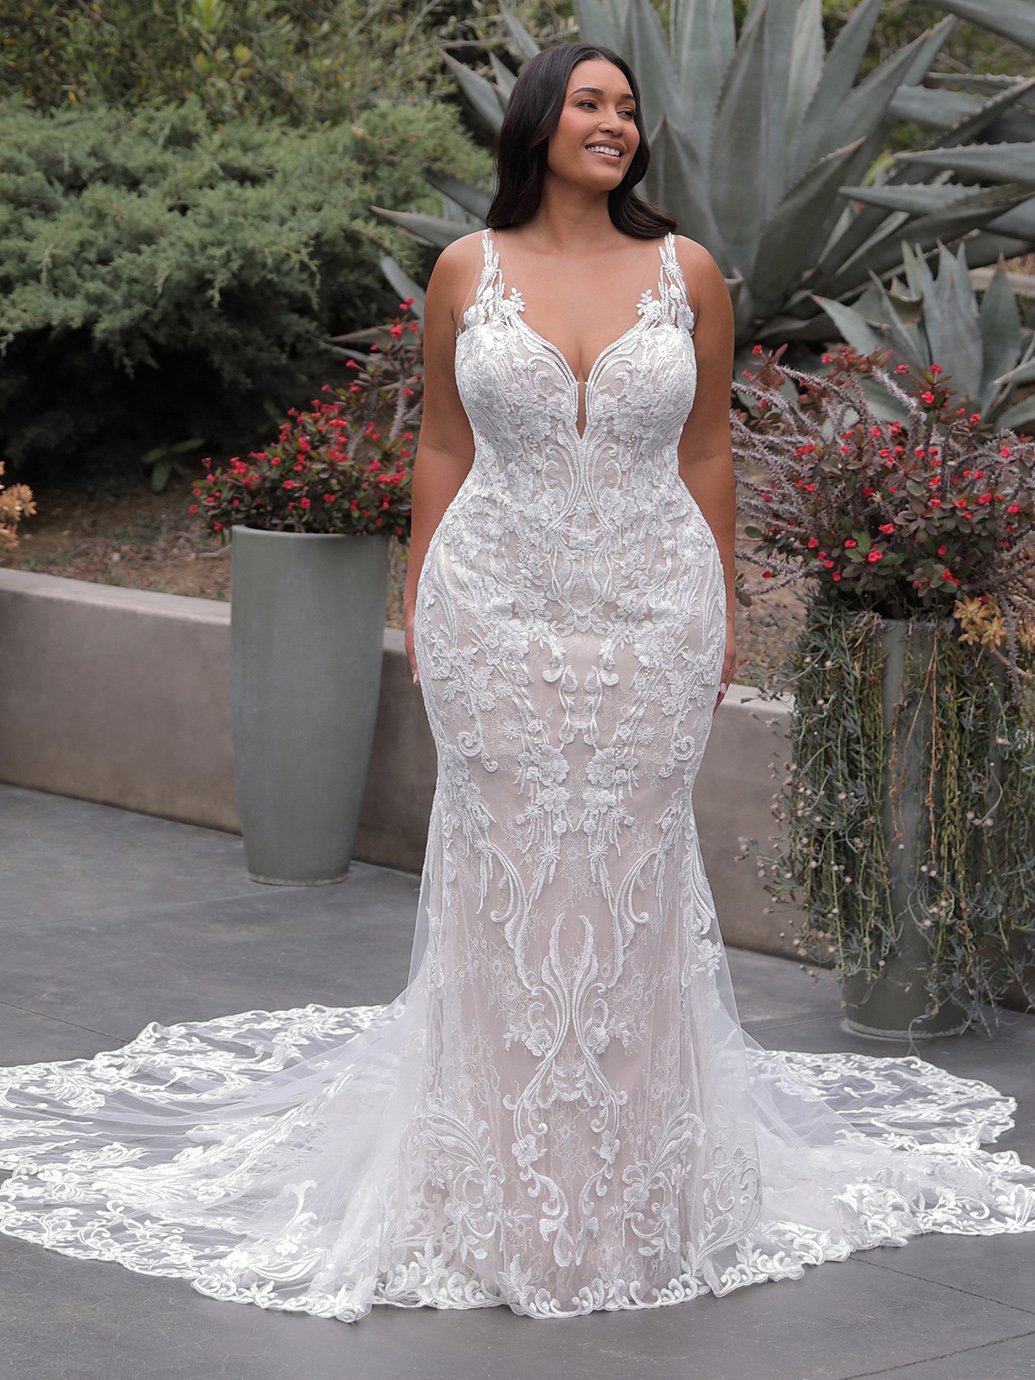 blanc-de-blanc-bridal-boutique-cleveland-dress-wedding-gown-elysee-edition-Francoise (1).jpg